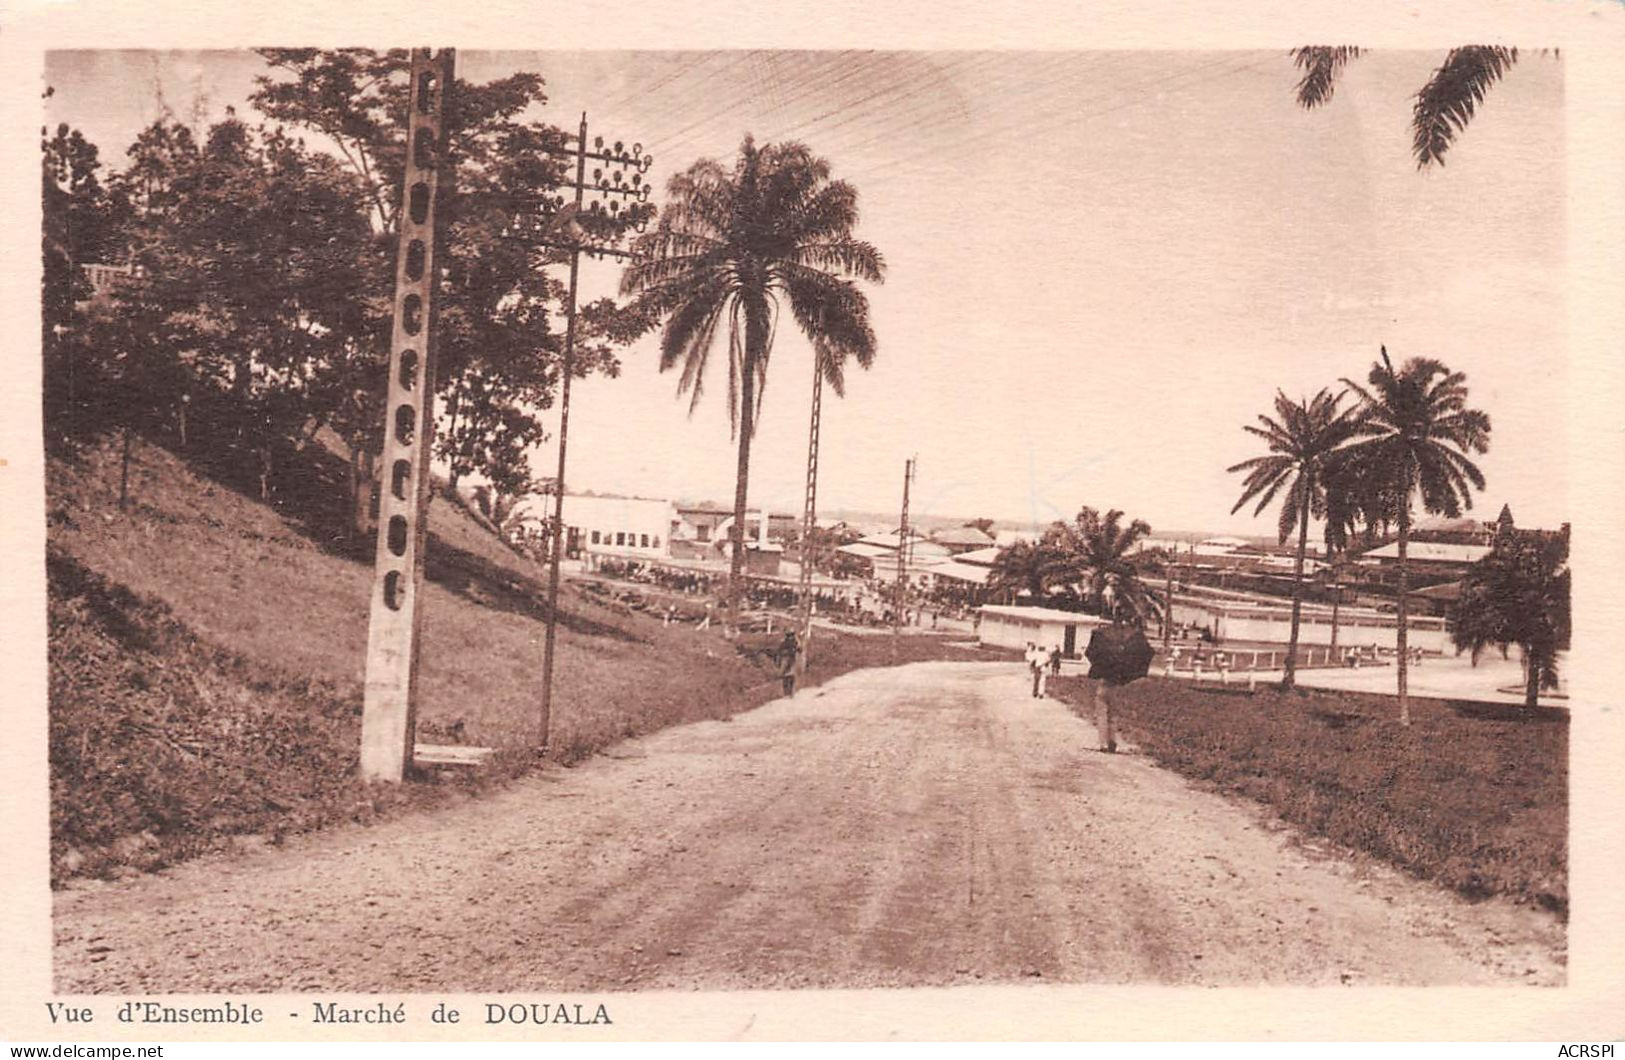 CAMEROUN  Douala  Route Du Marché     (Scan R/V) N°   5   \QQ1110Ter - Camerun